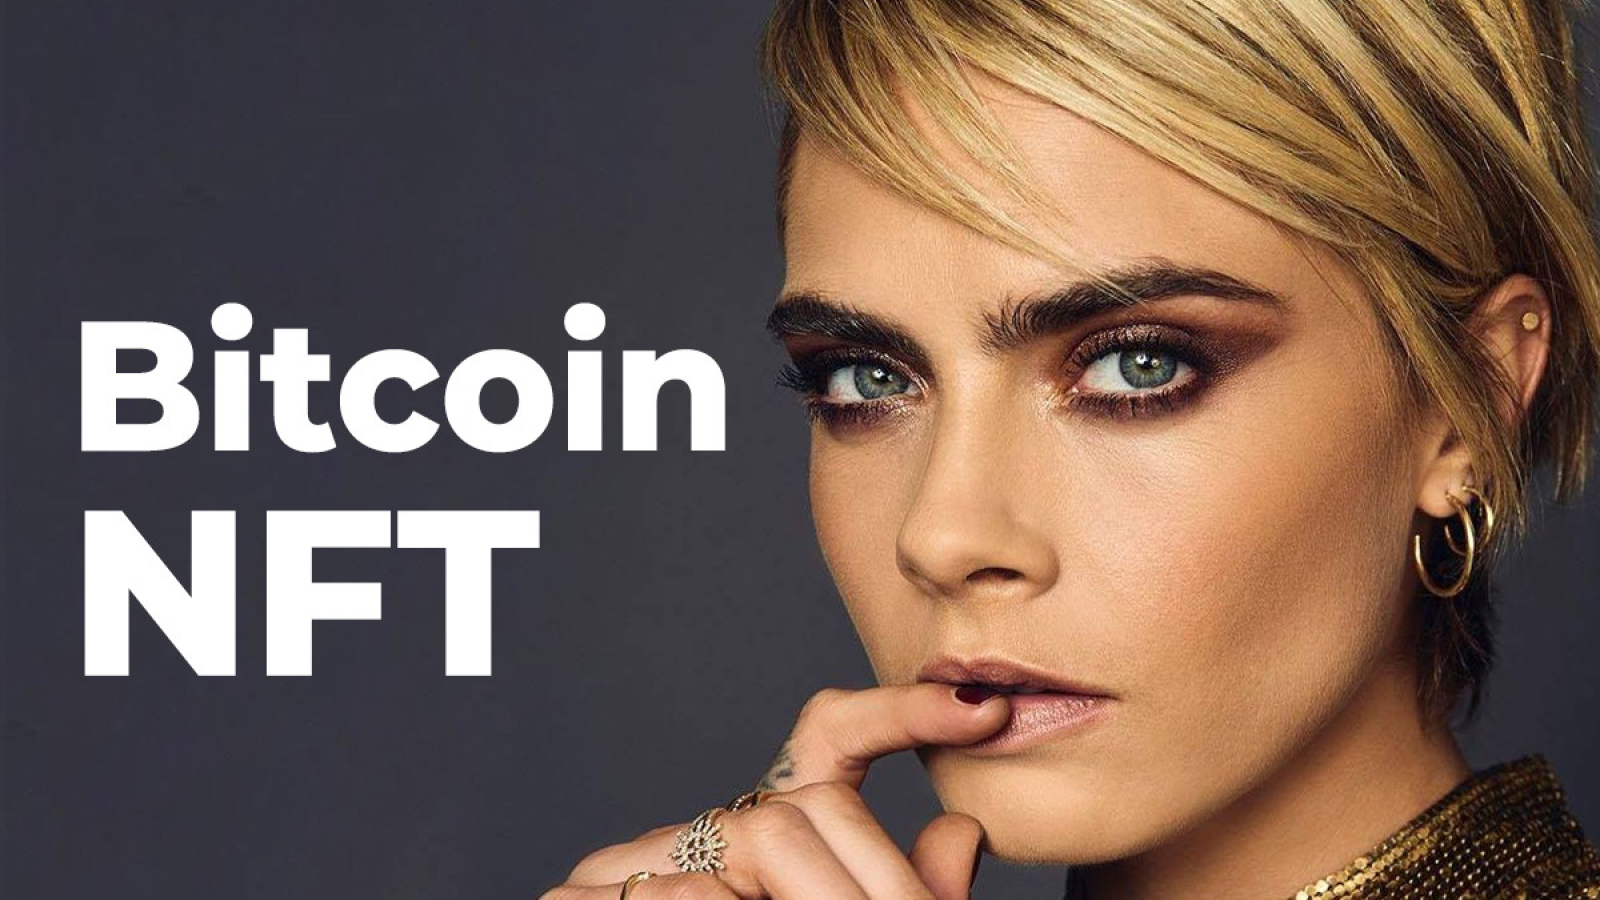 cara visszavonja a bitcoint